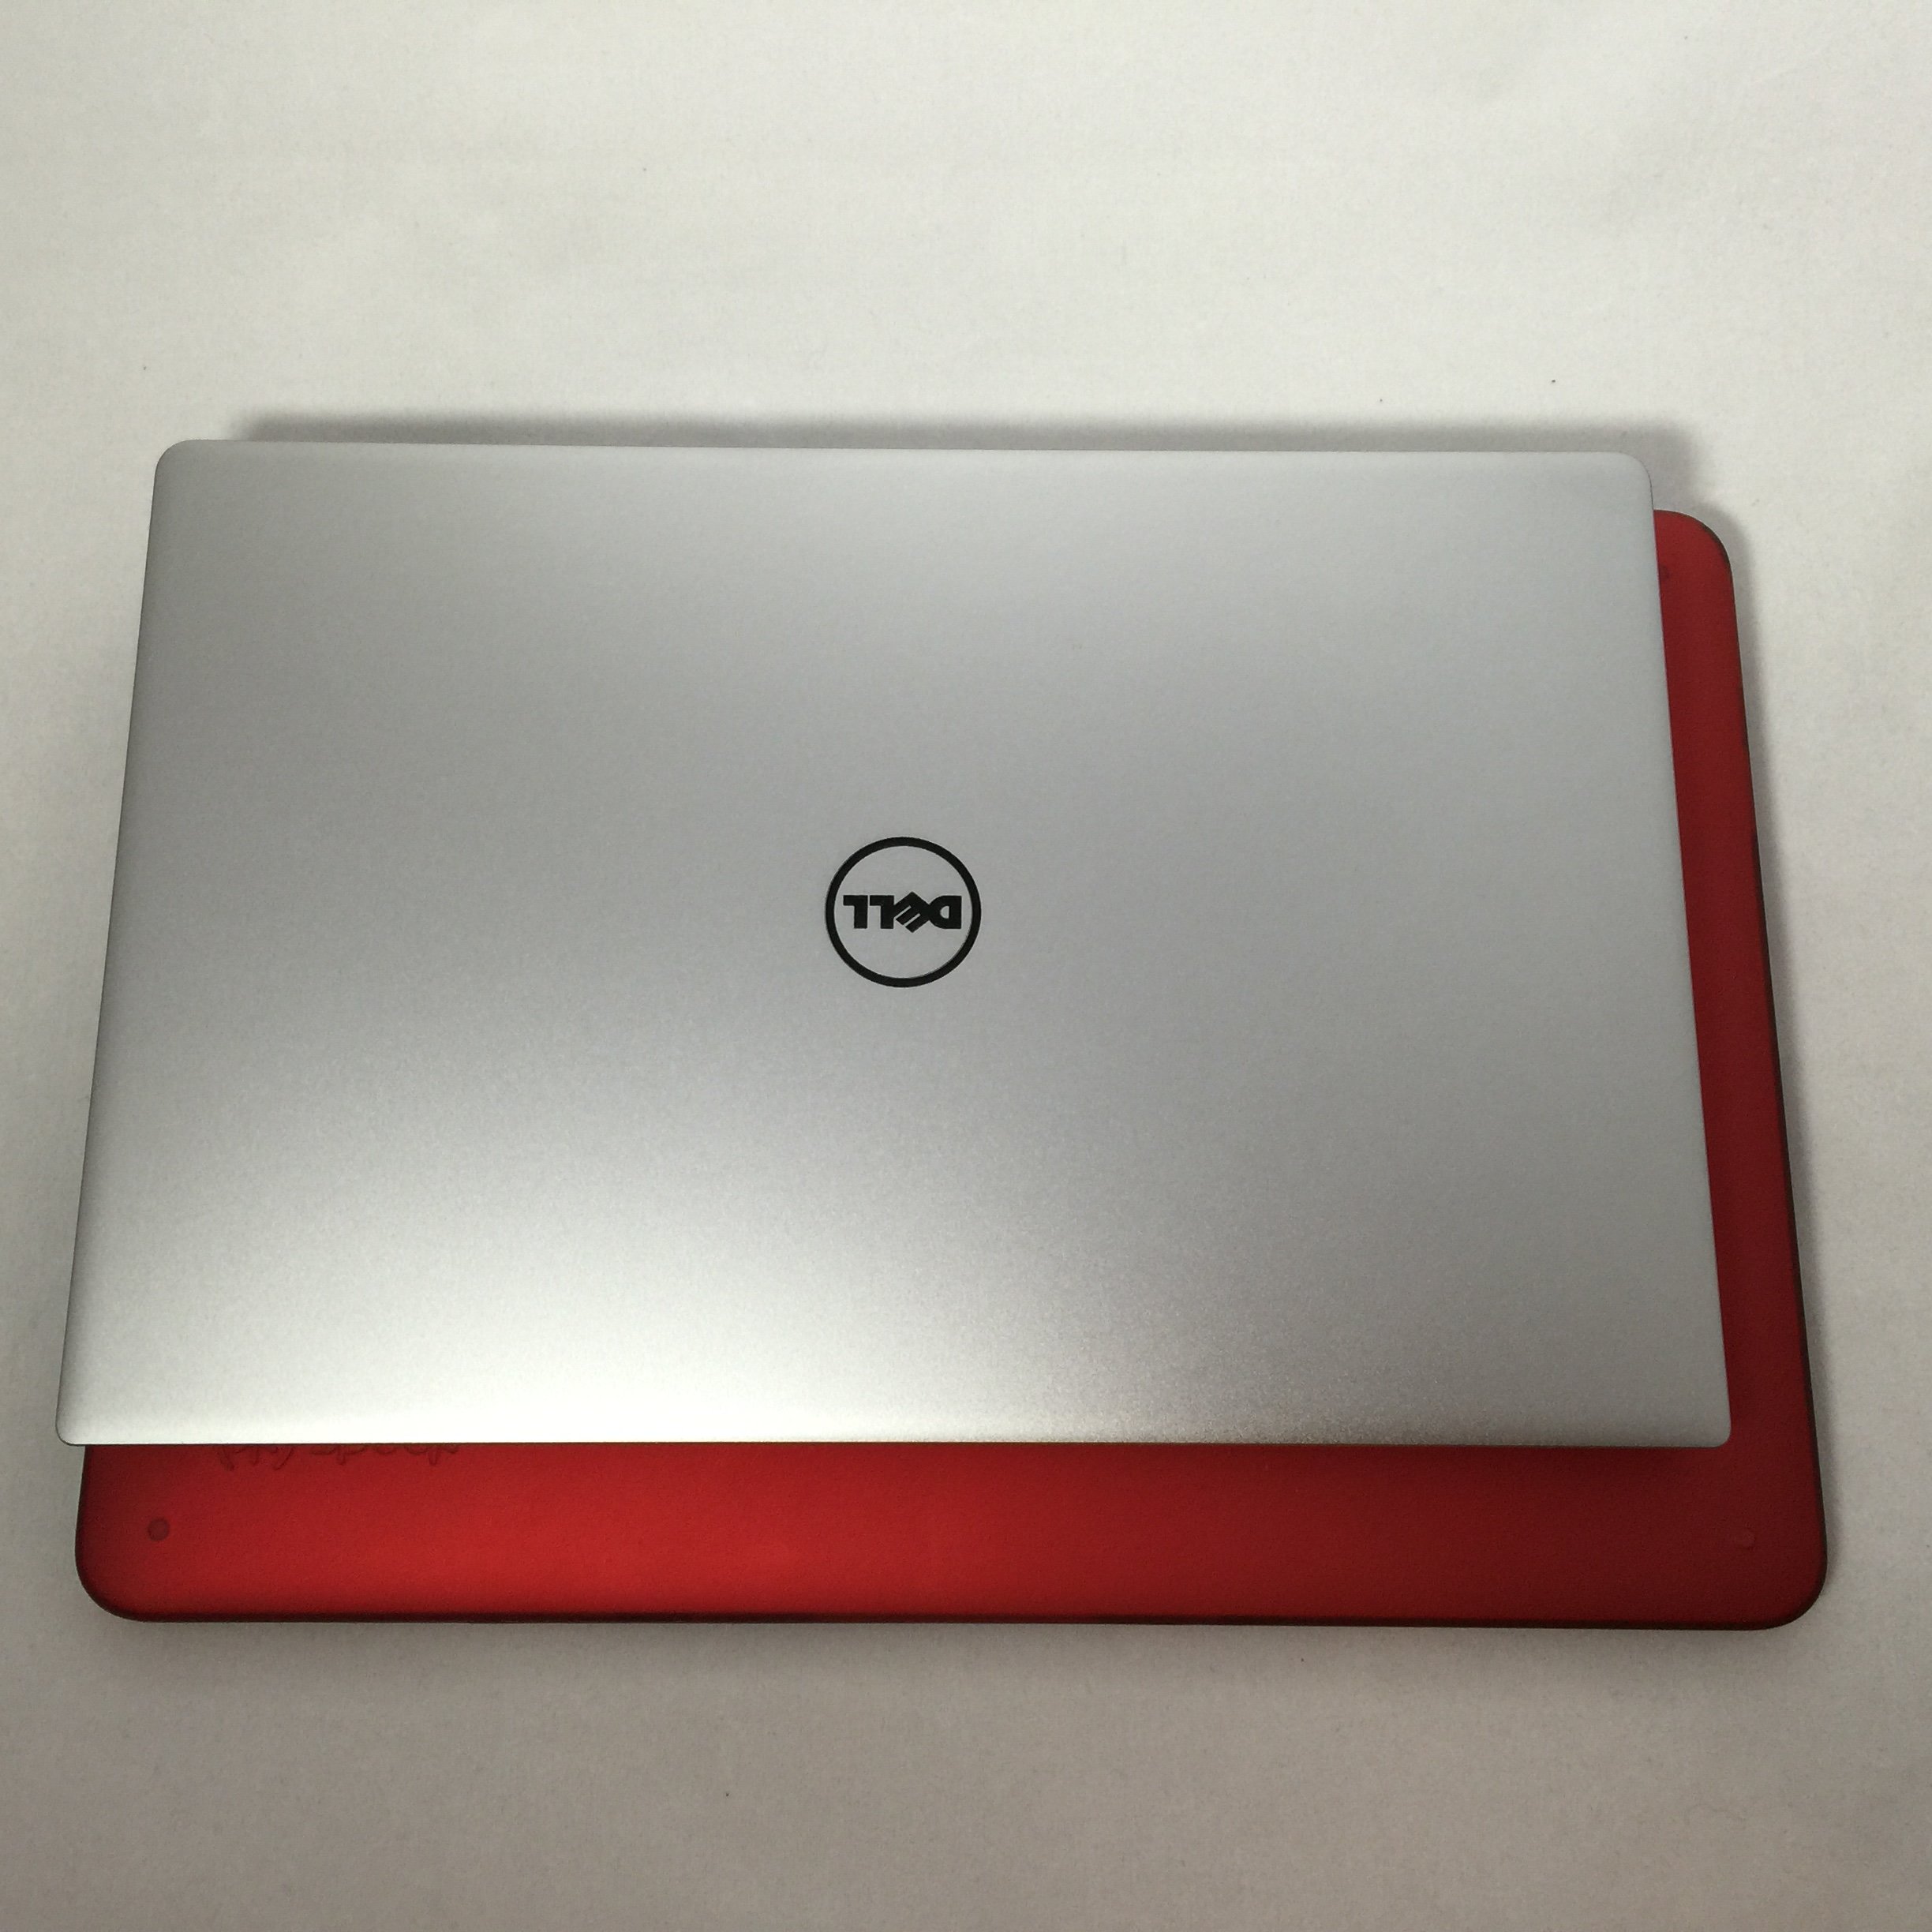 13' Macbook Air in red... looks big? It's strange but true